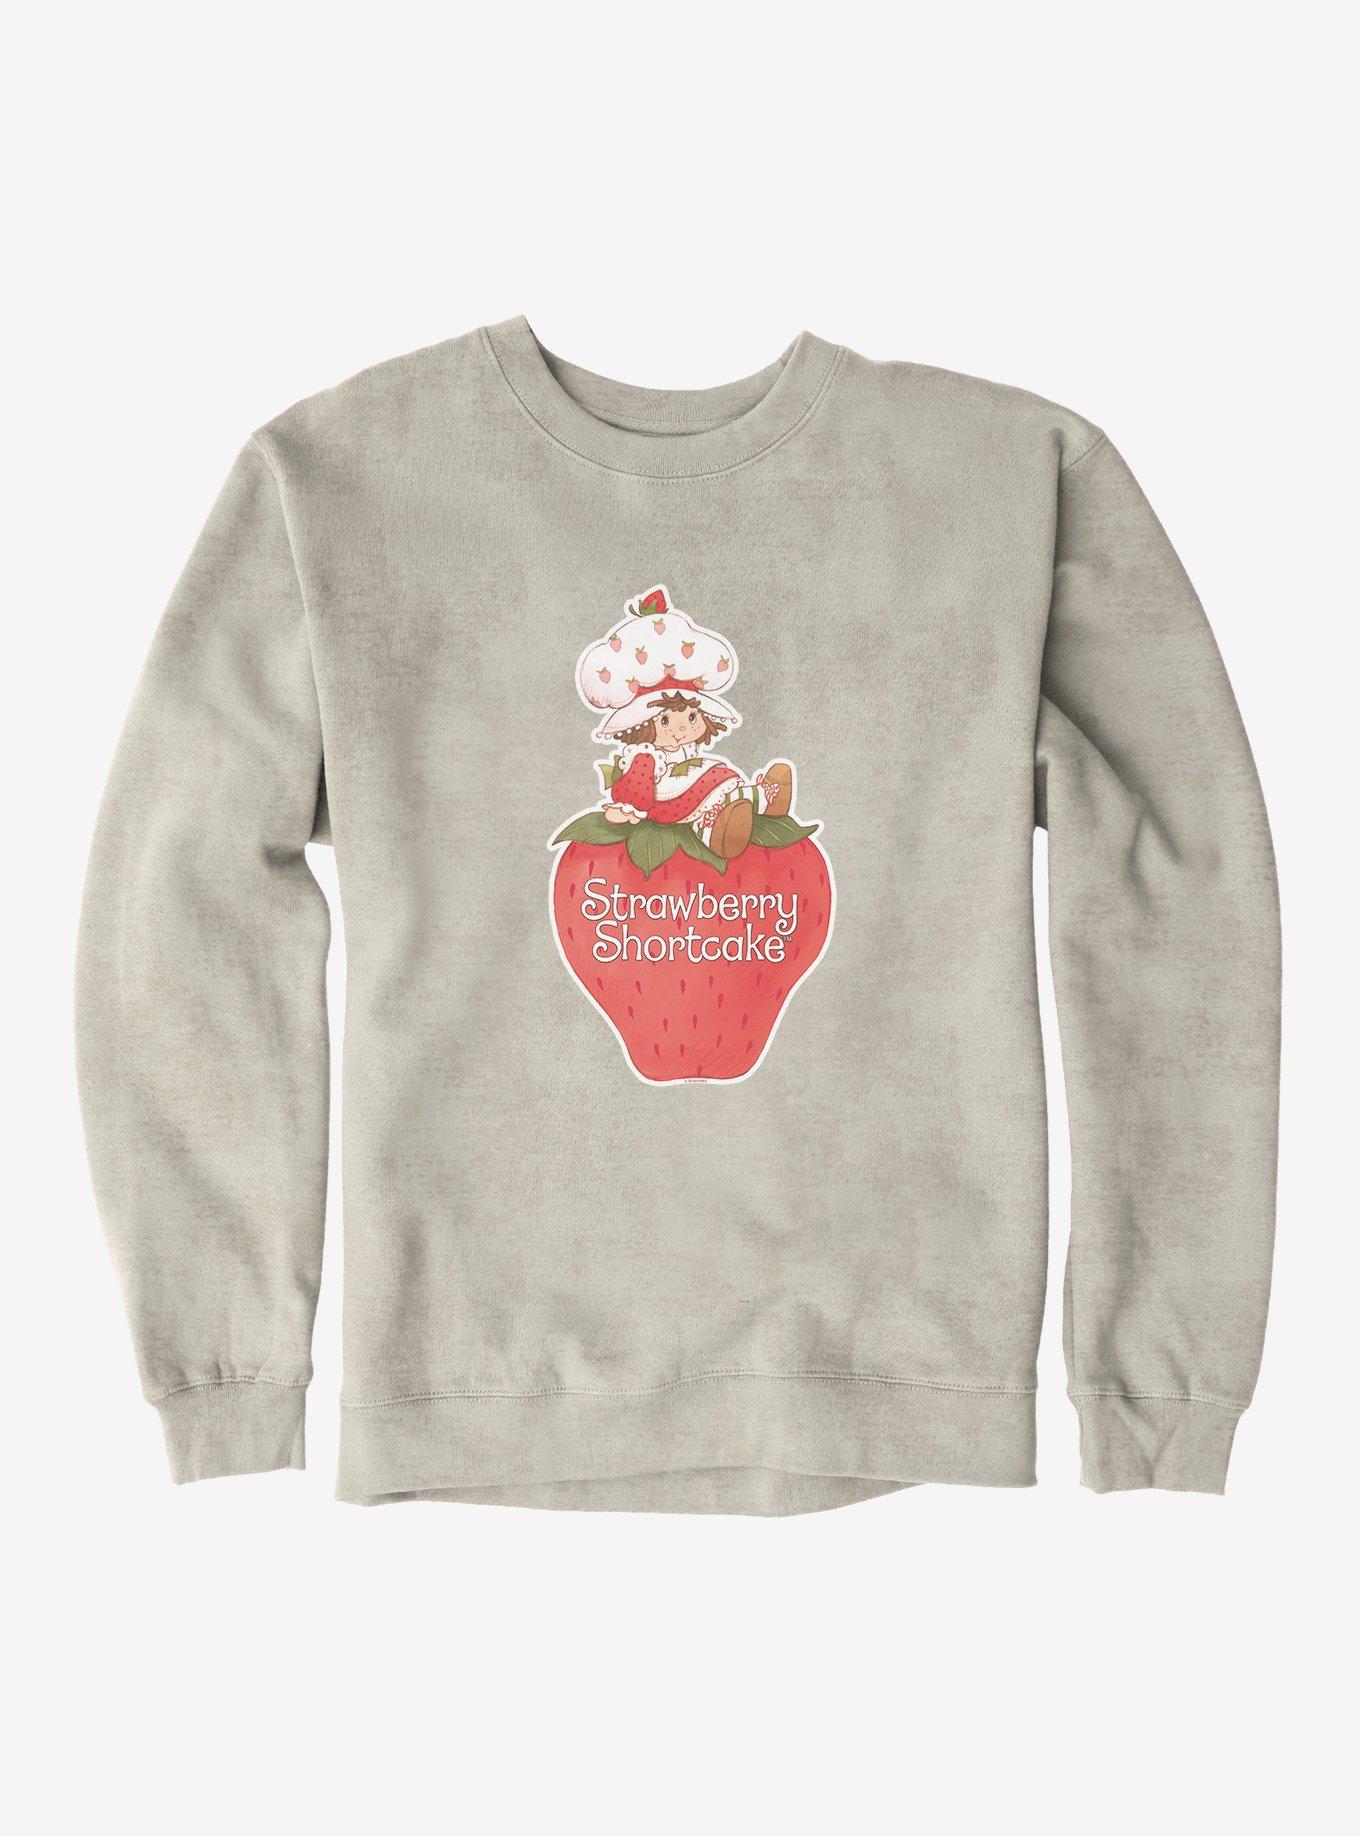 Hot Topic Strawberry Shortcake Berry Portrait Sweatshirt